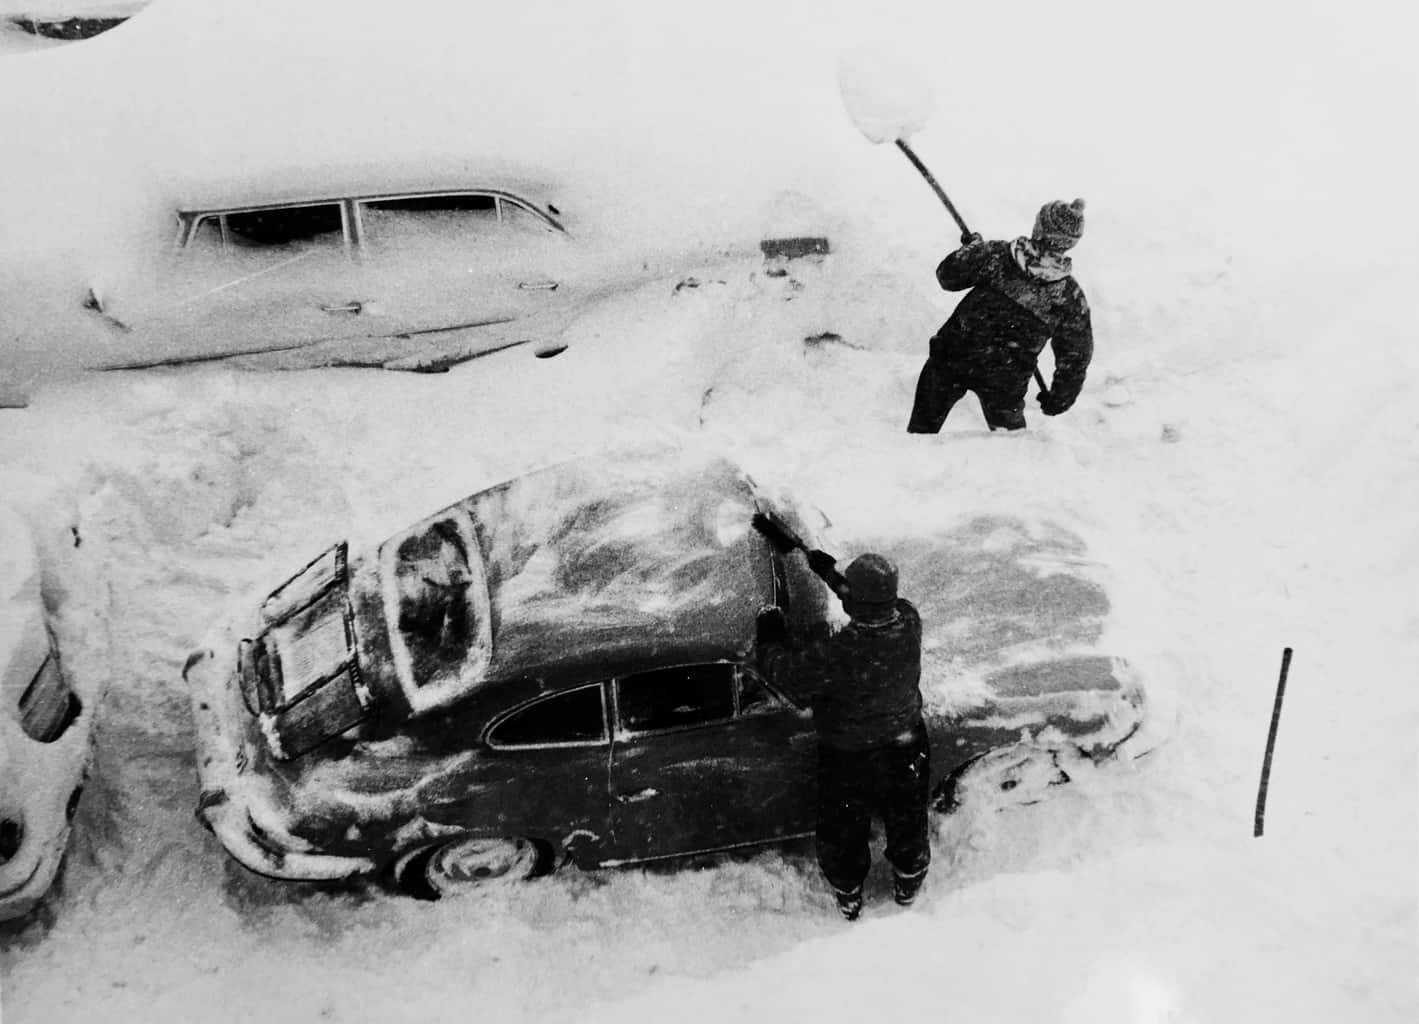 1950s Beetle Car buried in snow